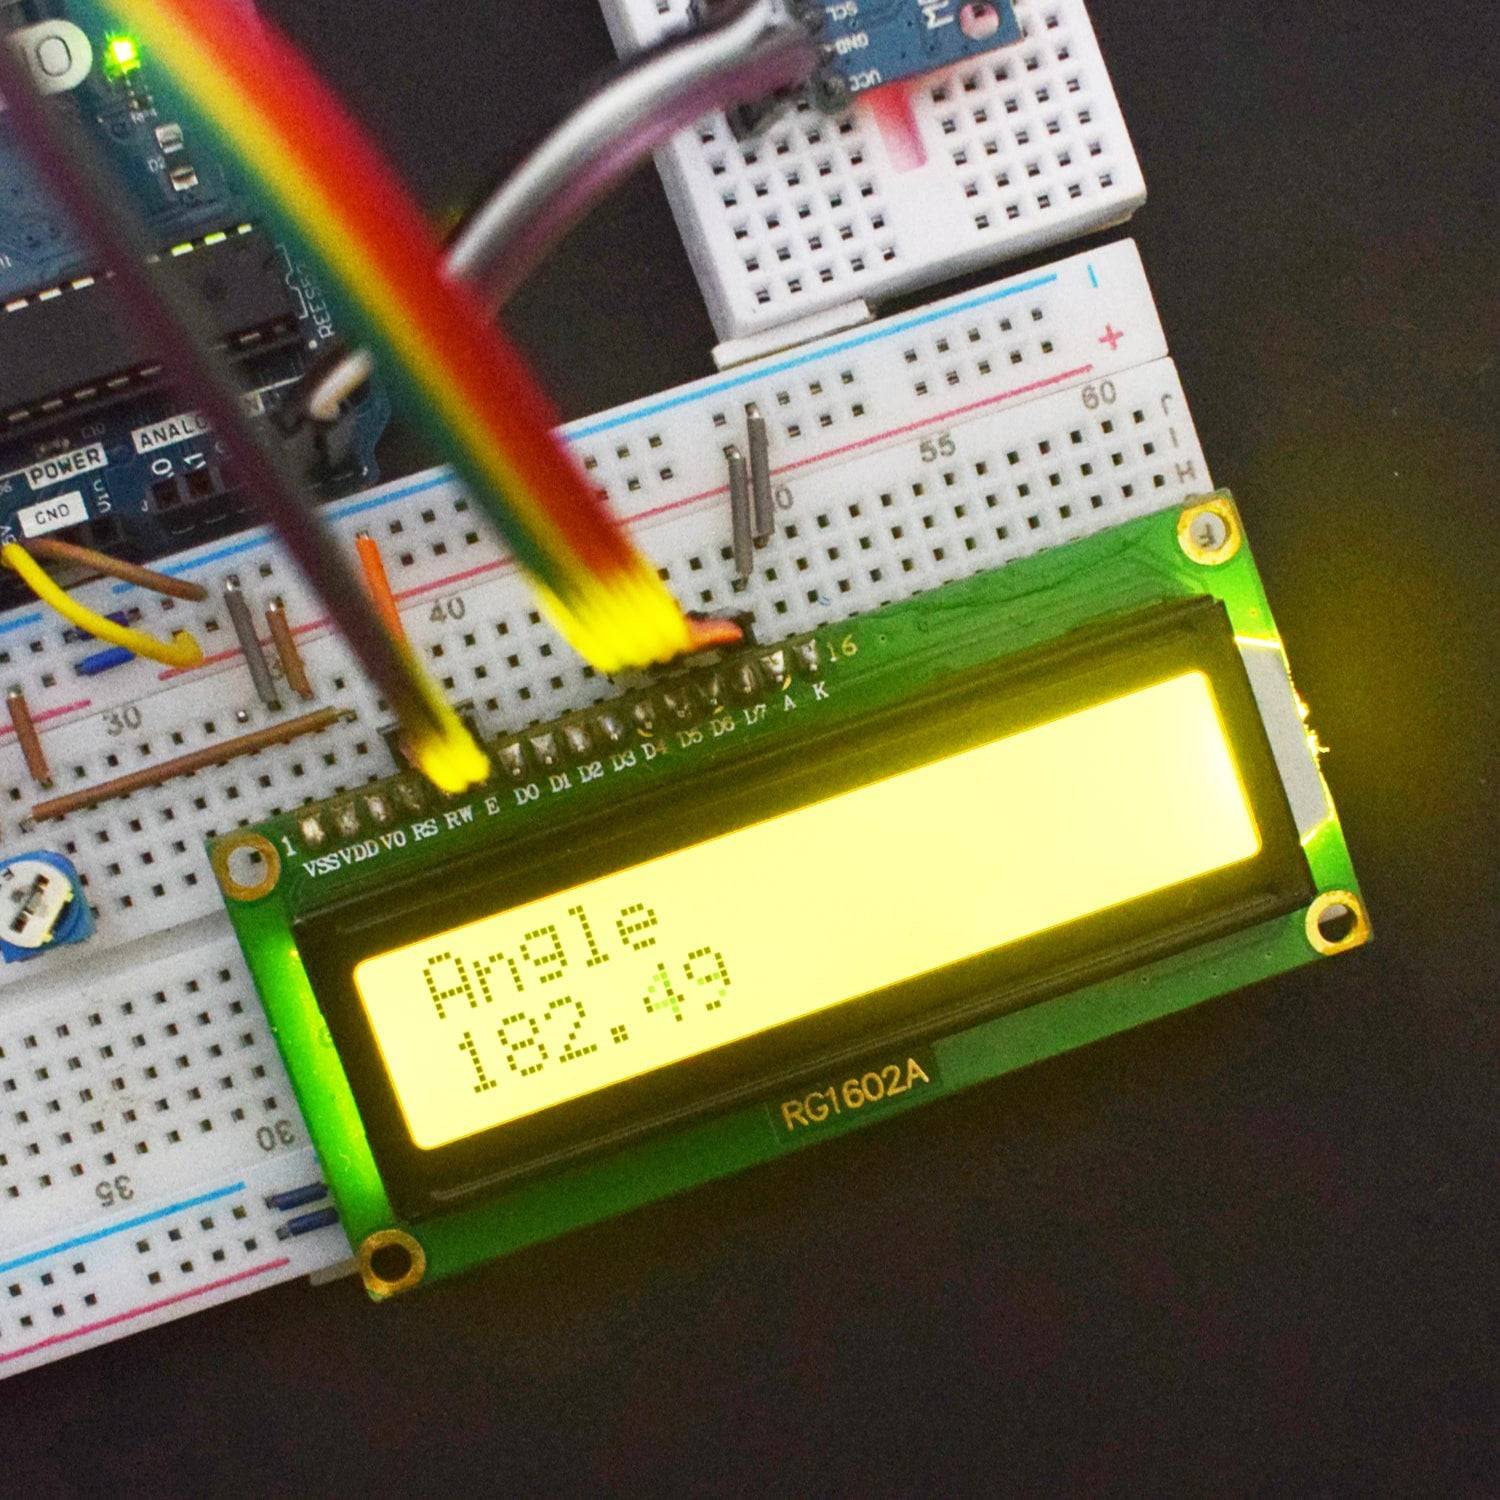 Arduino Starter Kit Make a Digital Protractor